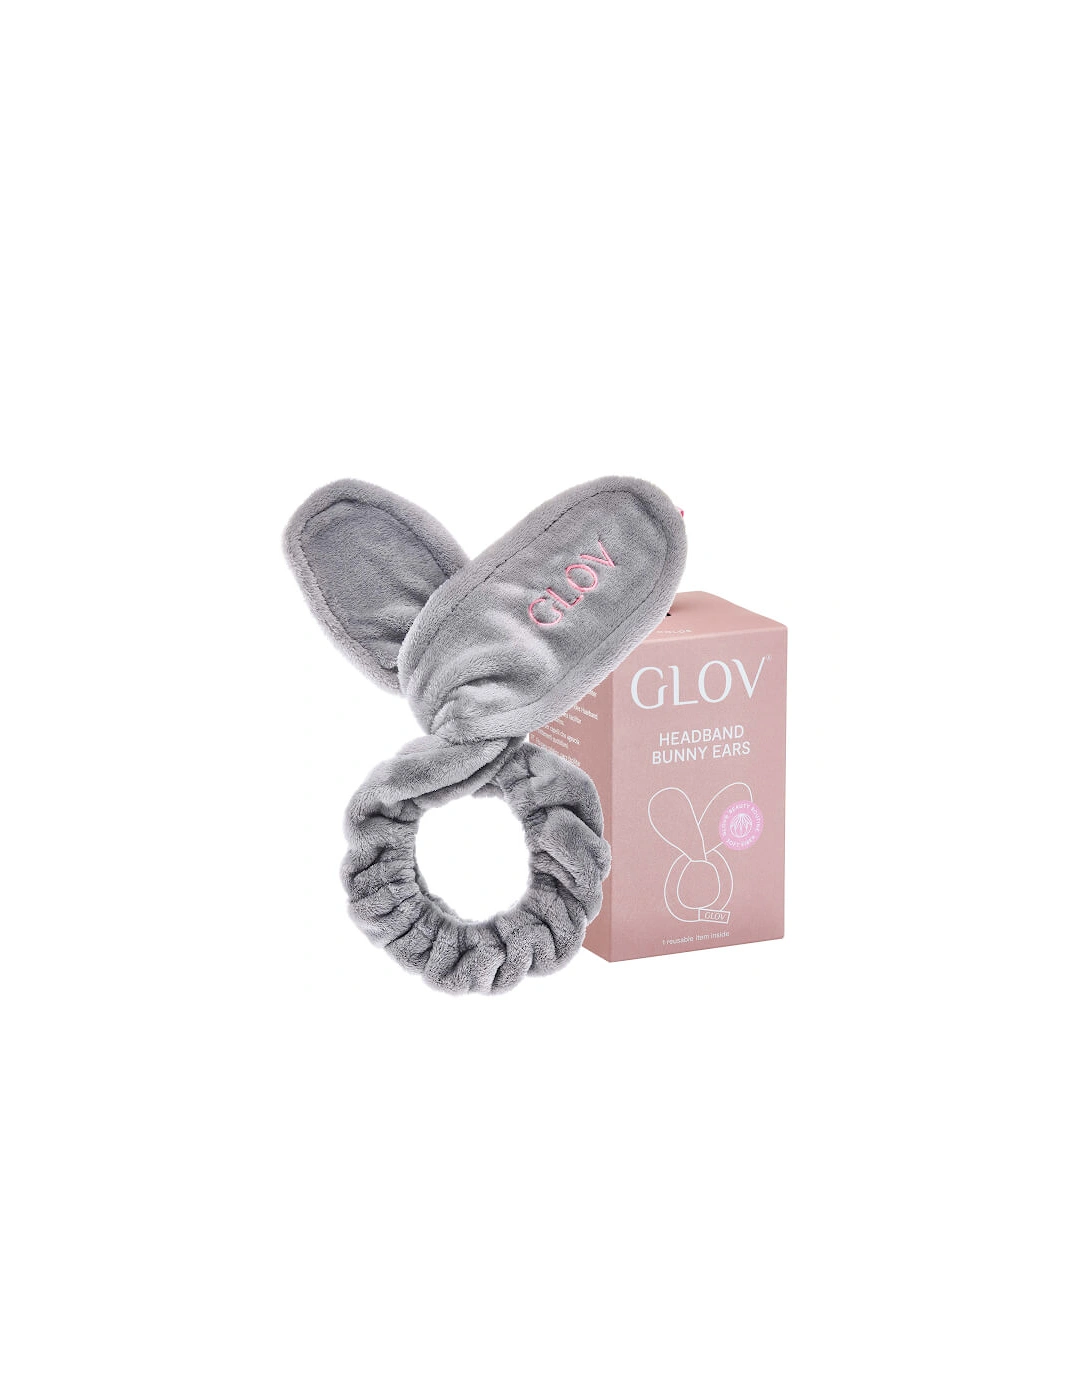 GLOV® Bunny Ears Hair Protecting Headband and Hair Tie - Grey, 2 of 1